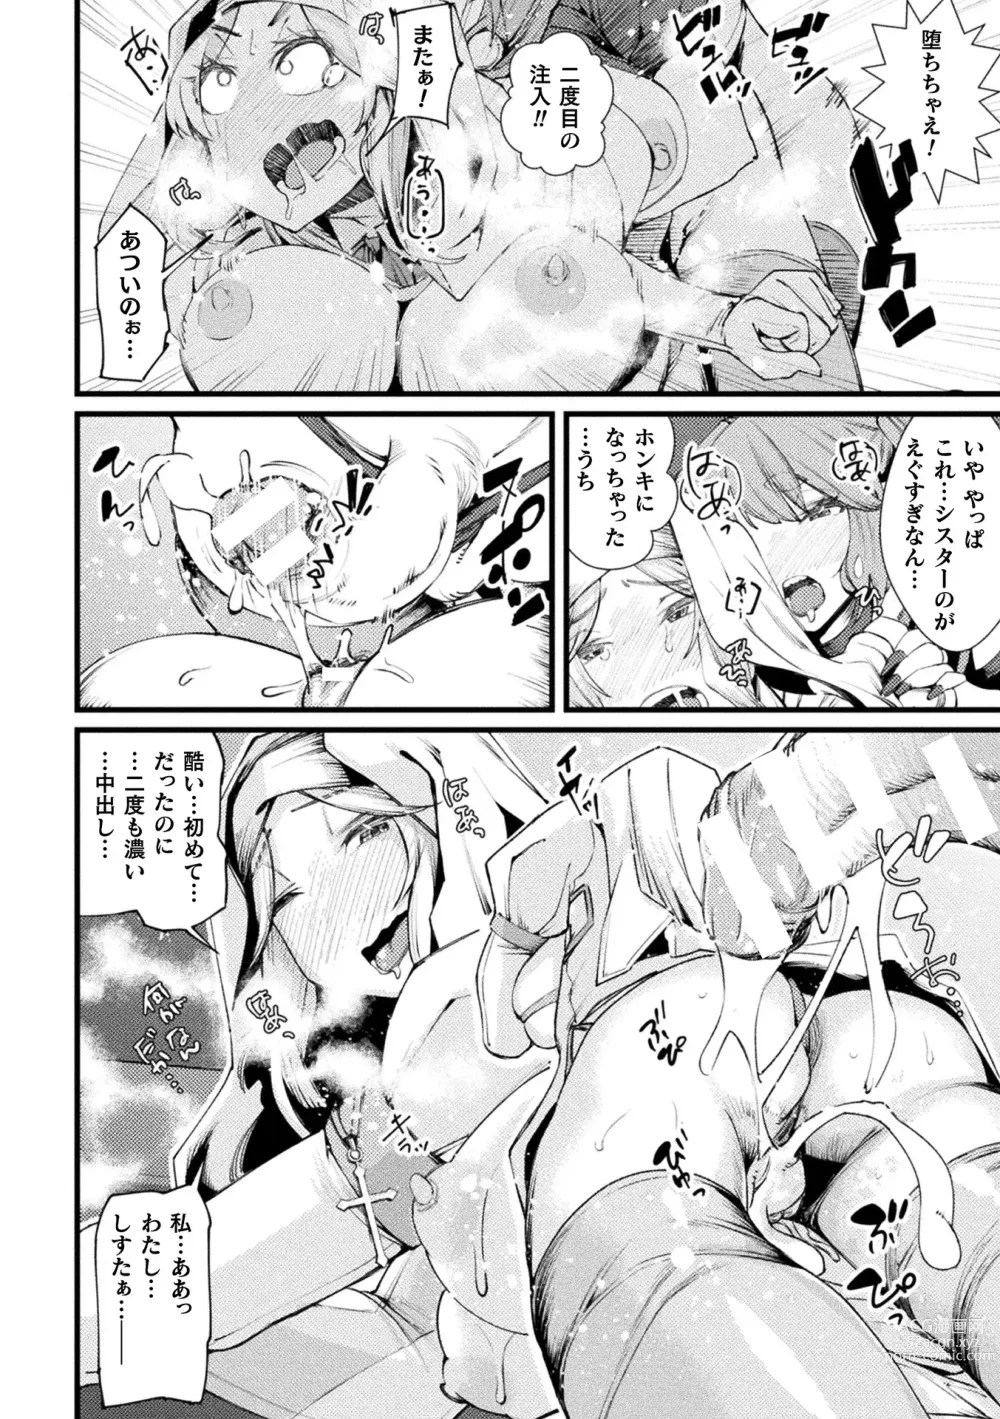 Page 90 of manga 2D Comic Magazine Akuochi Haramase Seigi no Bishoujo Akuten Jutai Vol. 1